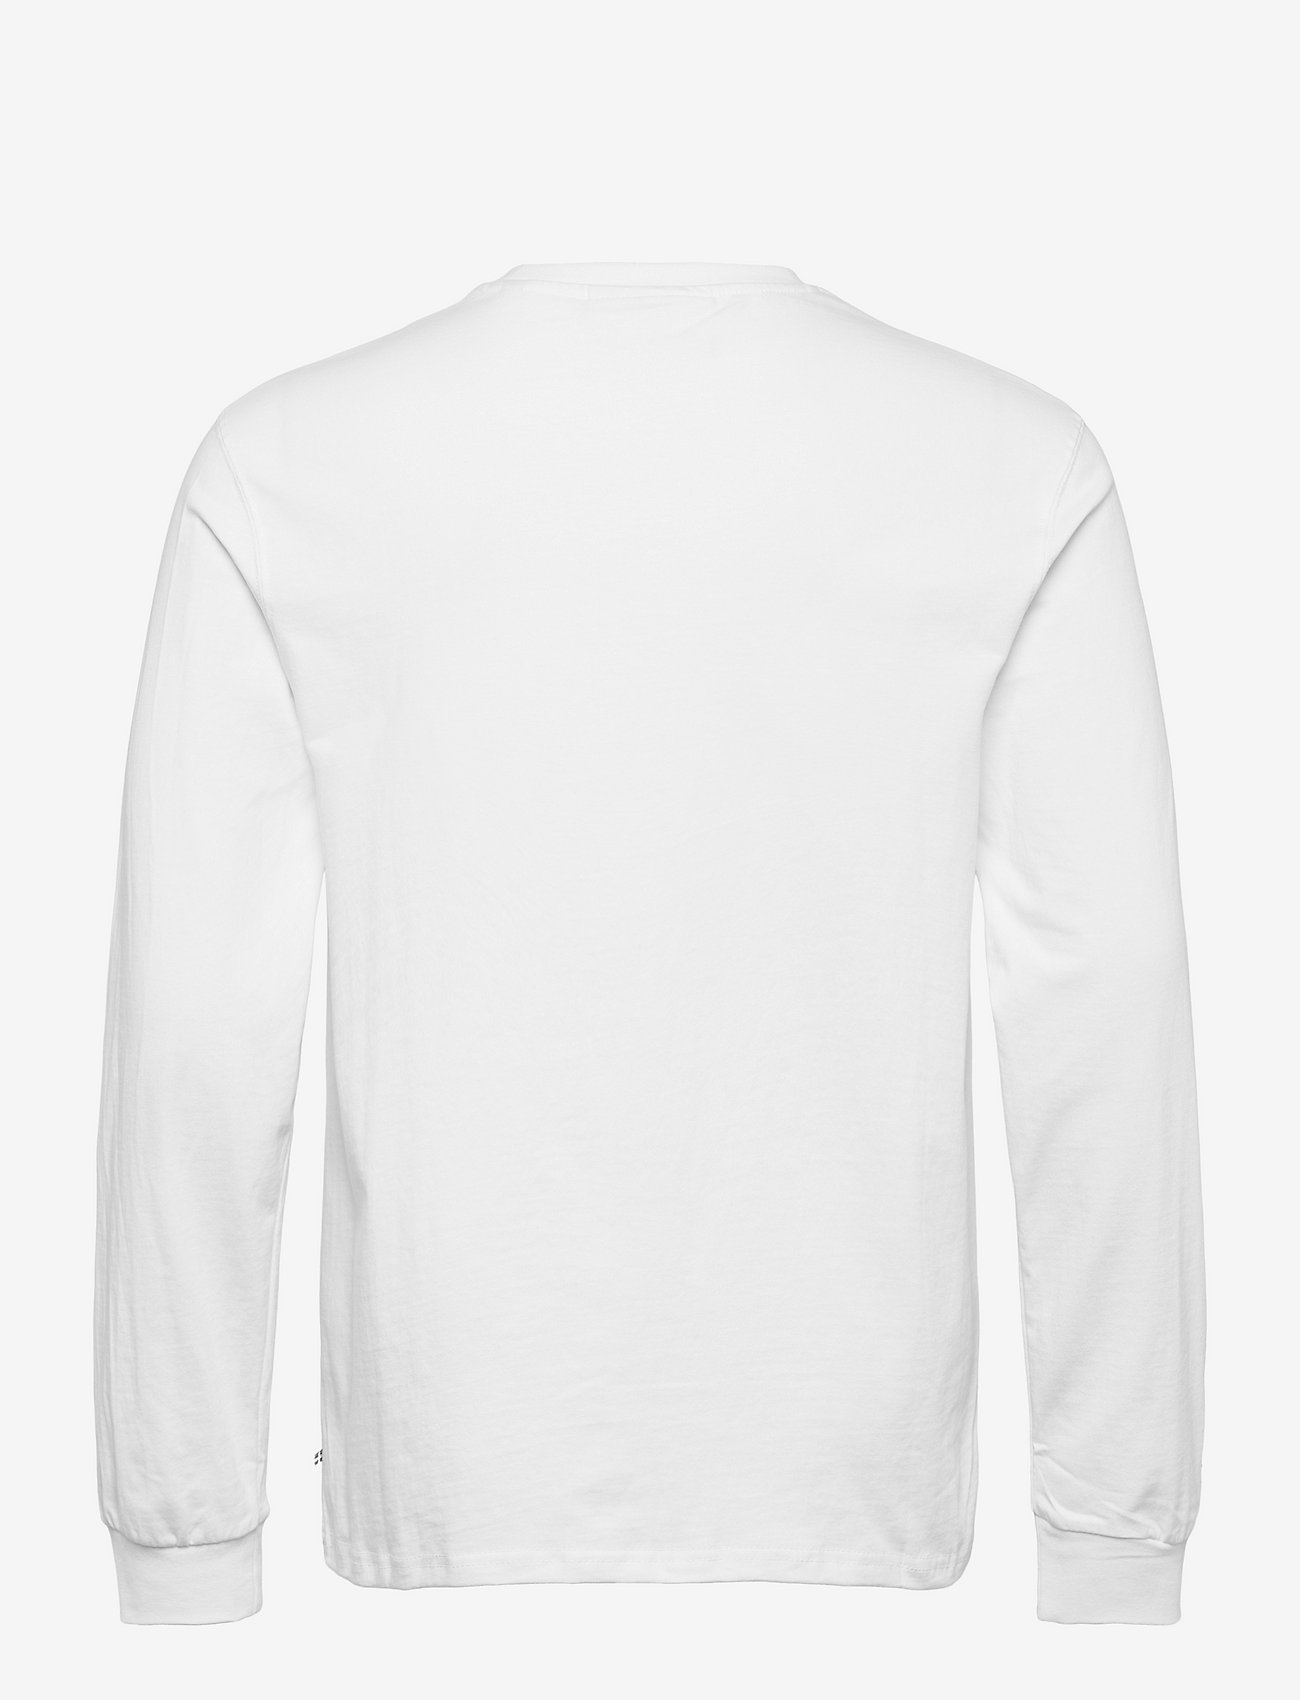 HAN Kjøbenhavn - Casual Tee Long Sleeve - podstawowe koszulki - white logo - 1